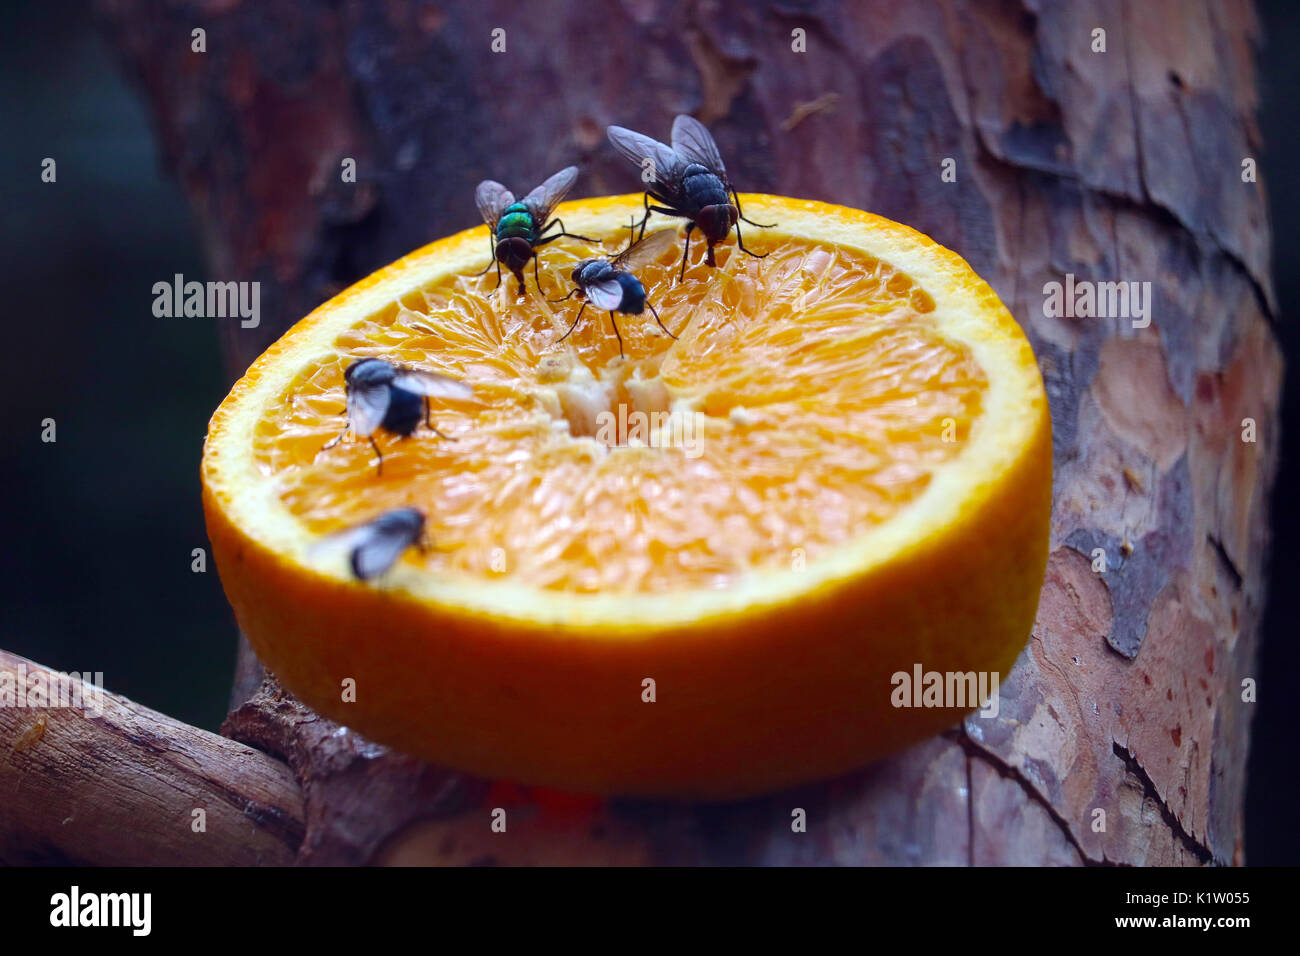 five blow flies sitting on a slice of orange Stock Photo